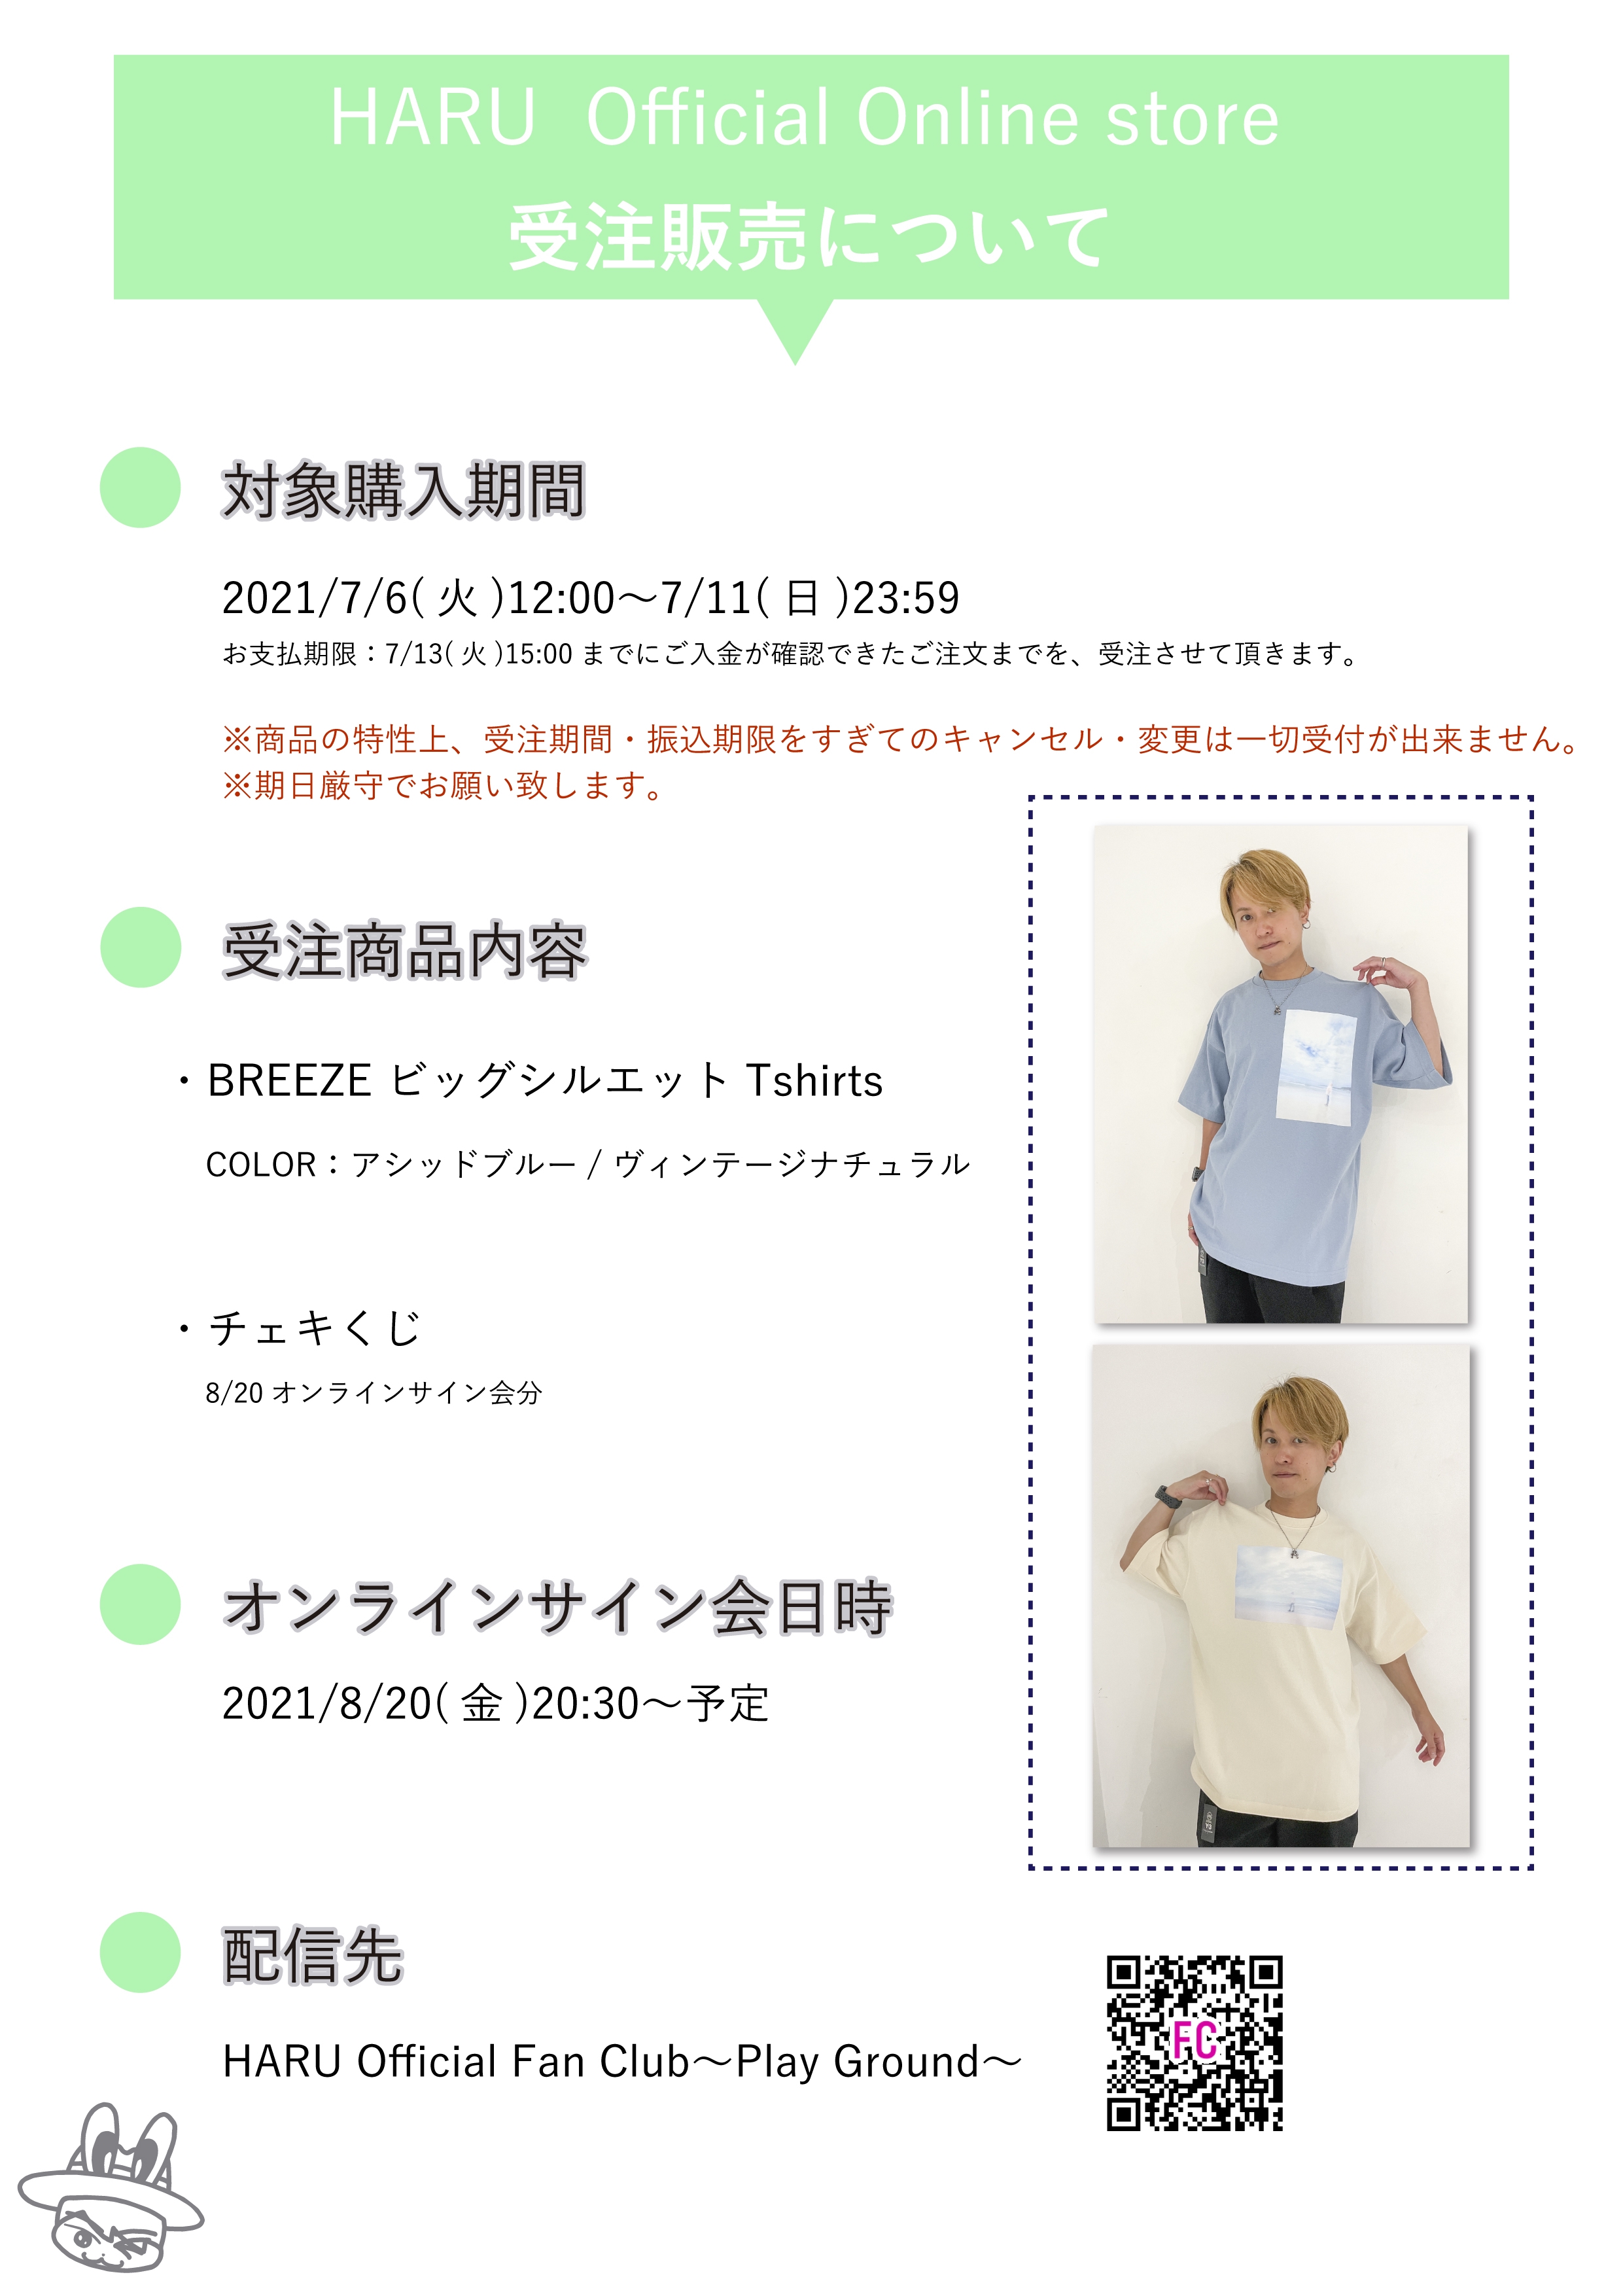 Online Store】BREEZE ビッグシルエットT-shirts受注販売のお知らせ